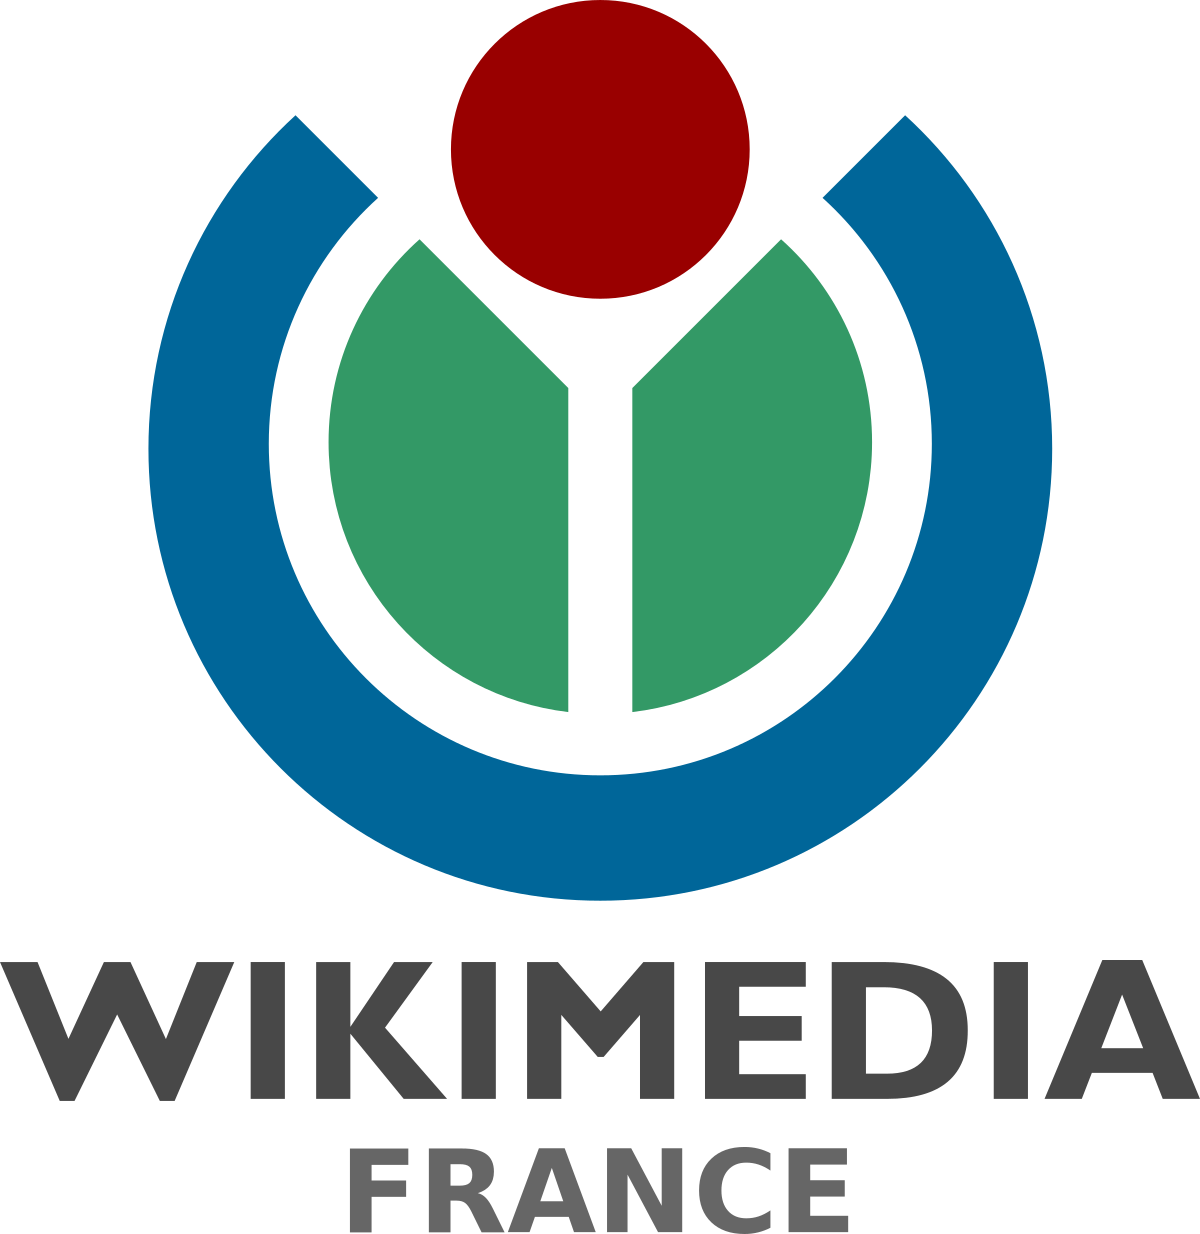 Logo Wikimedia France - bleu, rouge et vert.